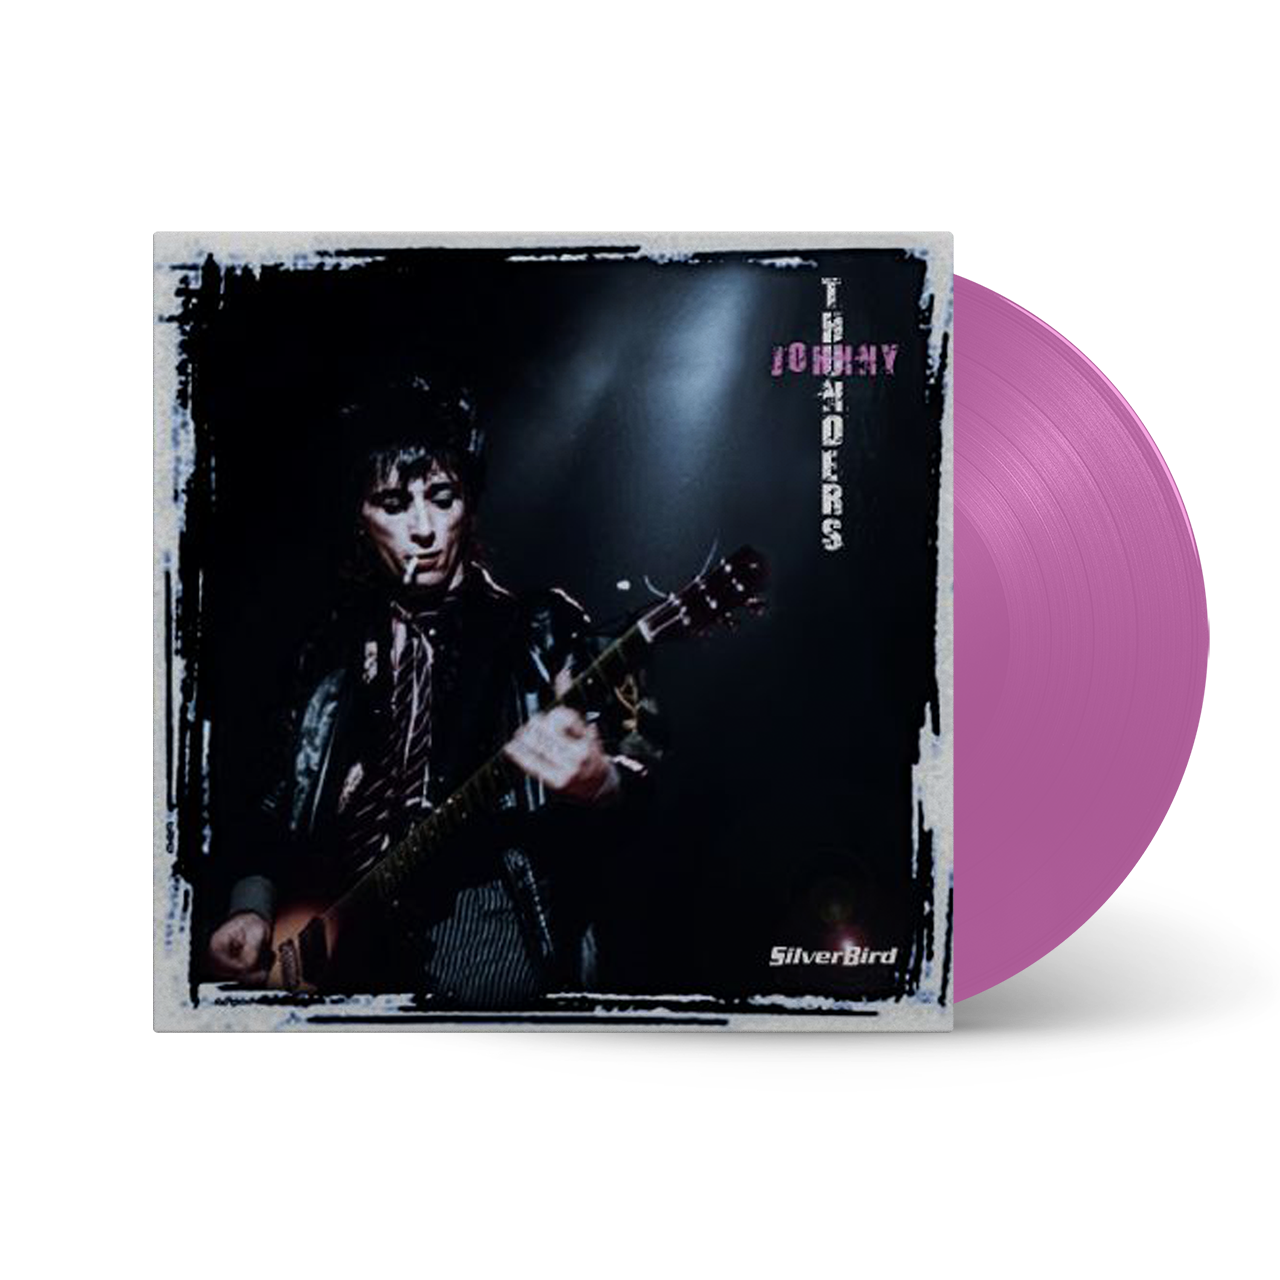 Johnny Thunders - Silverbird: Limited Pink Vinyl LP